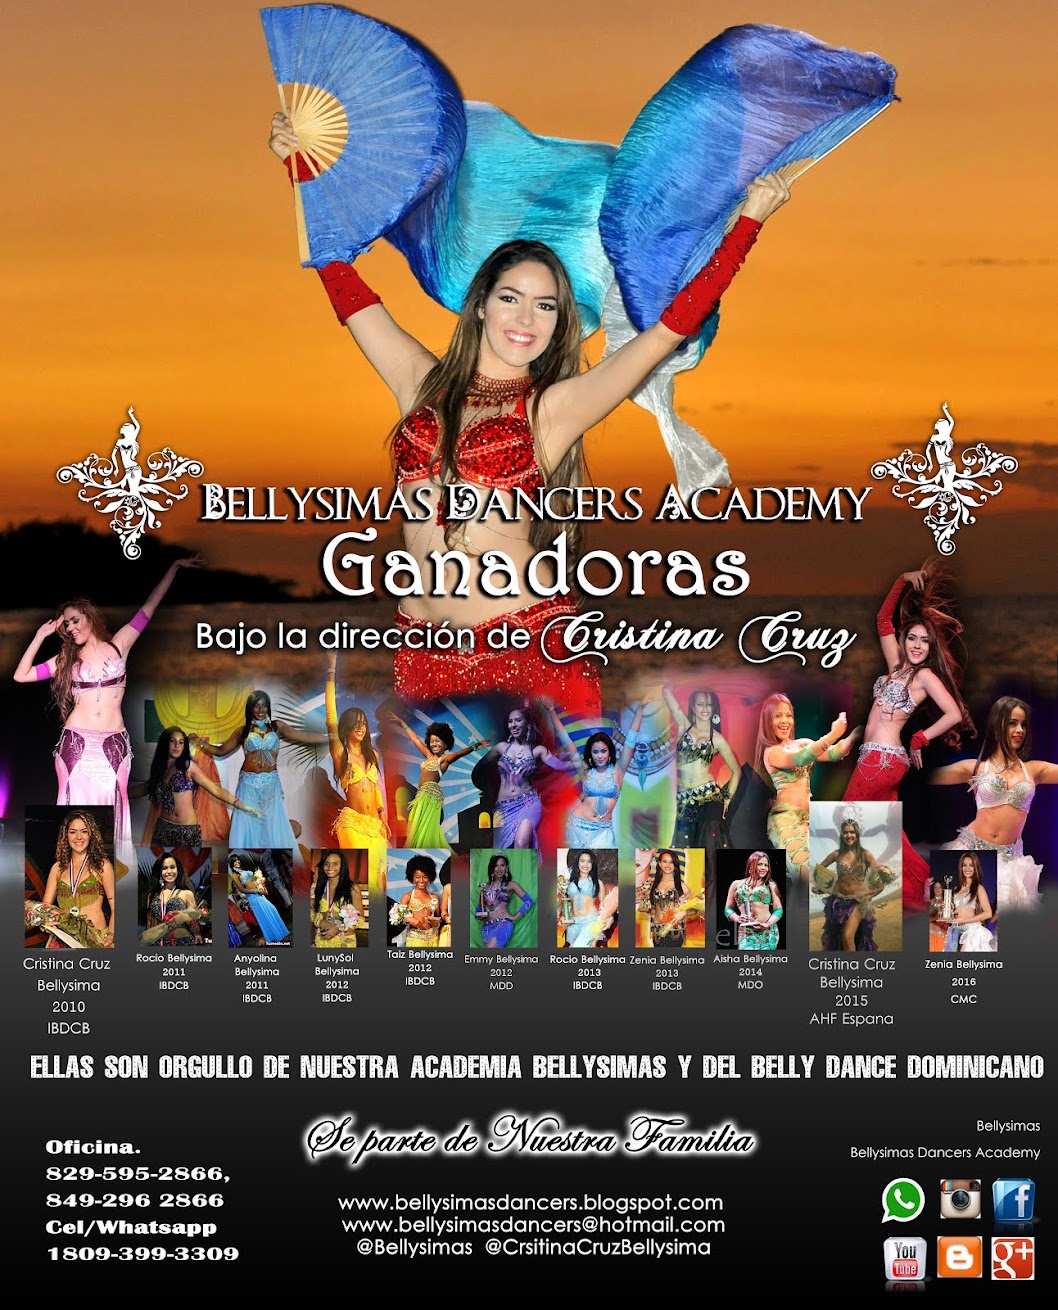 Orgullos de Bellysimas Dancers Academy